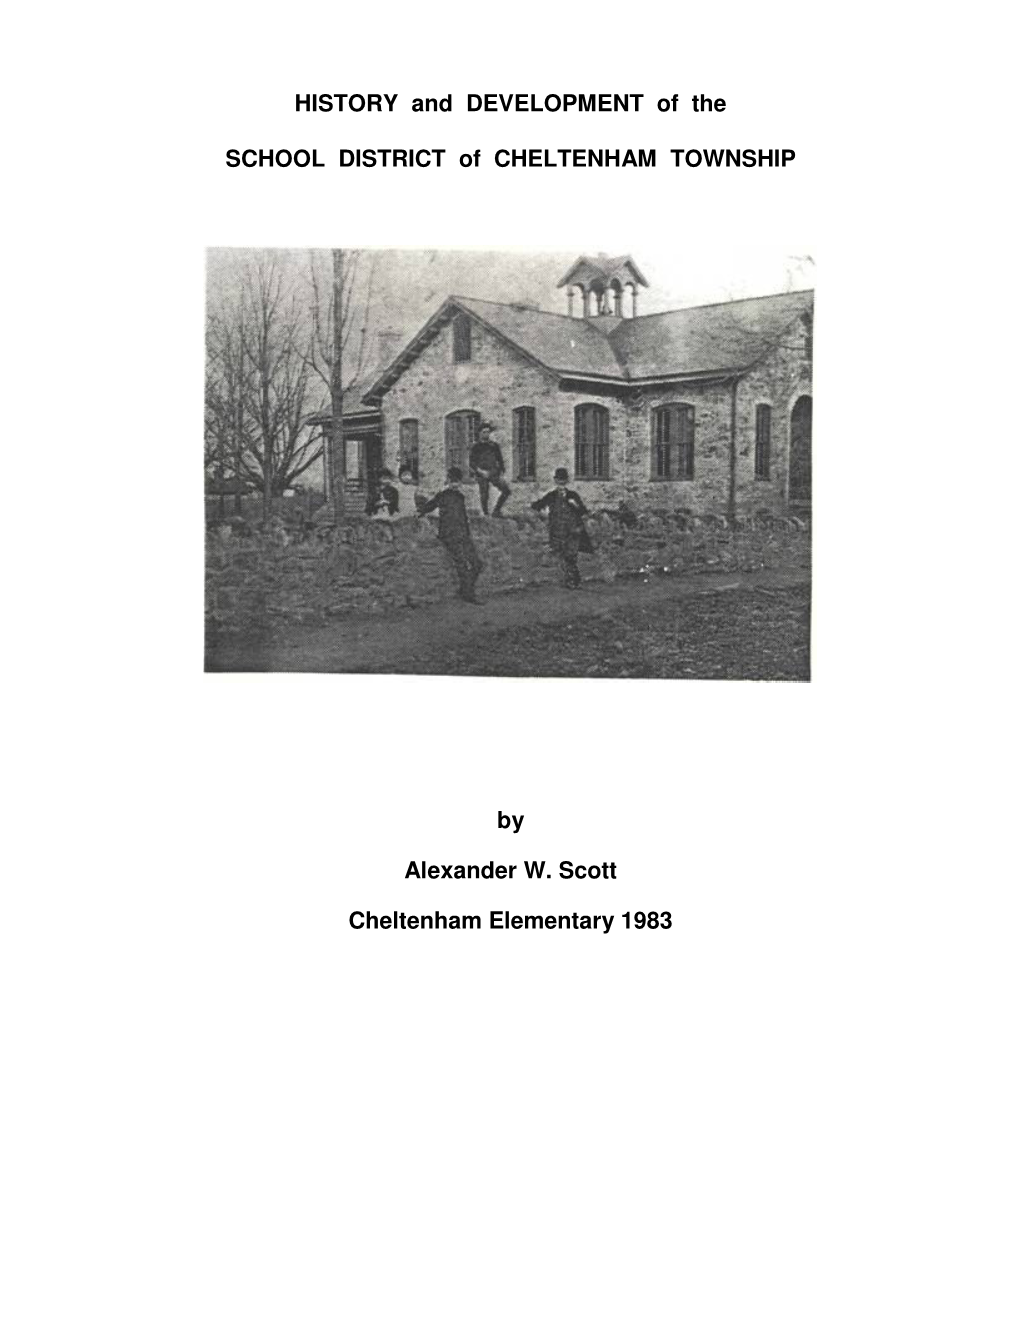 HISTORY and DEVELOPMENT of the SCHOOL DISTRICT of CHELTENHAM TOWNSHIP by Alexander W. Scott Cheltenham Elementary 1983